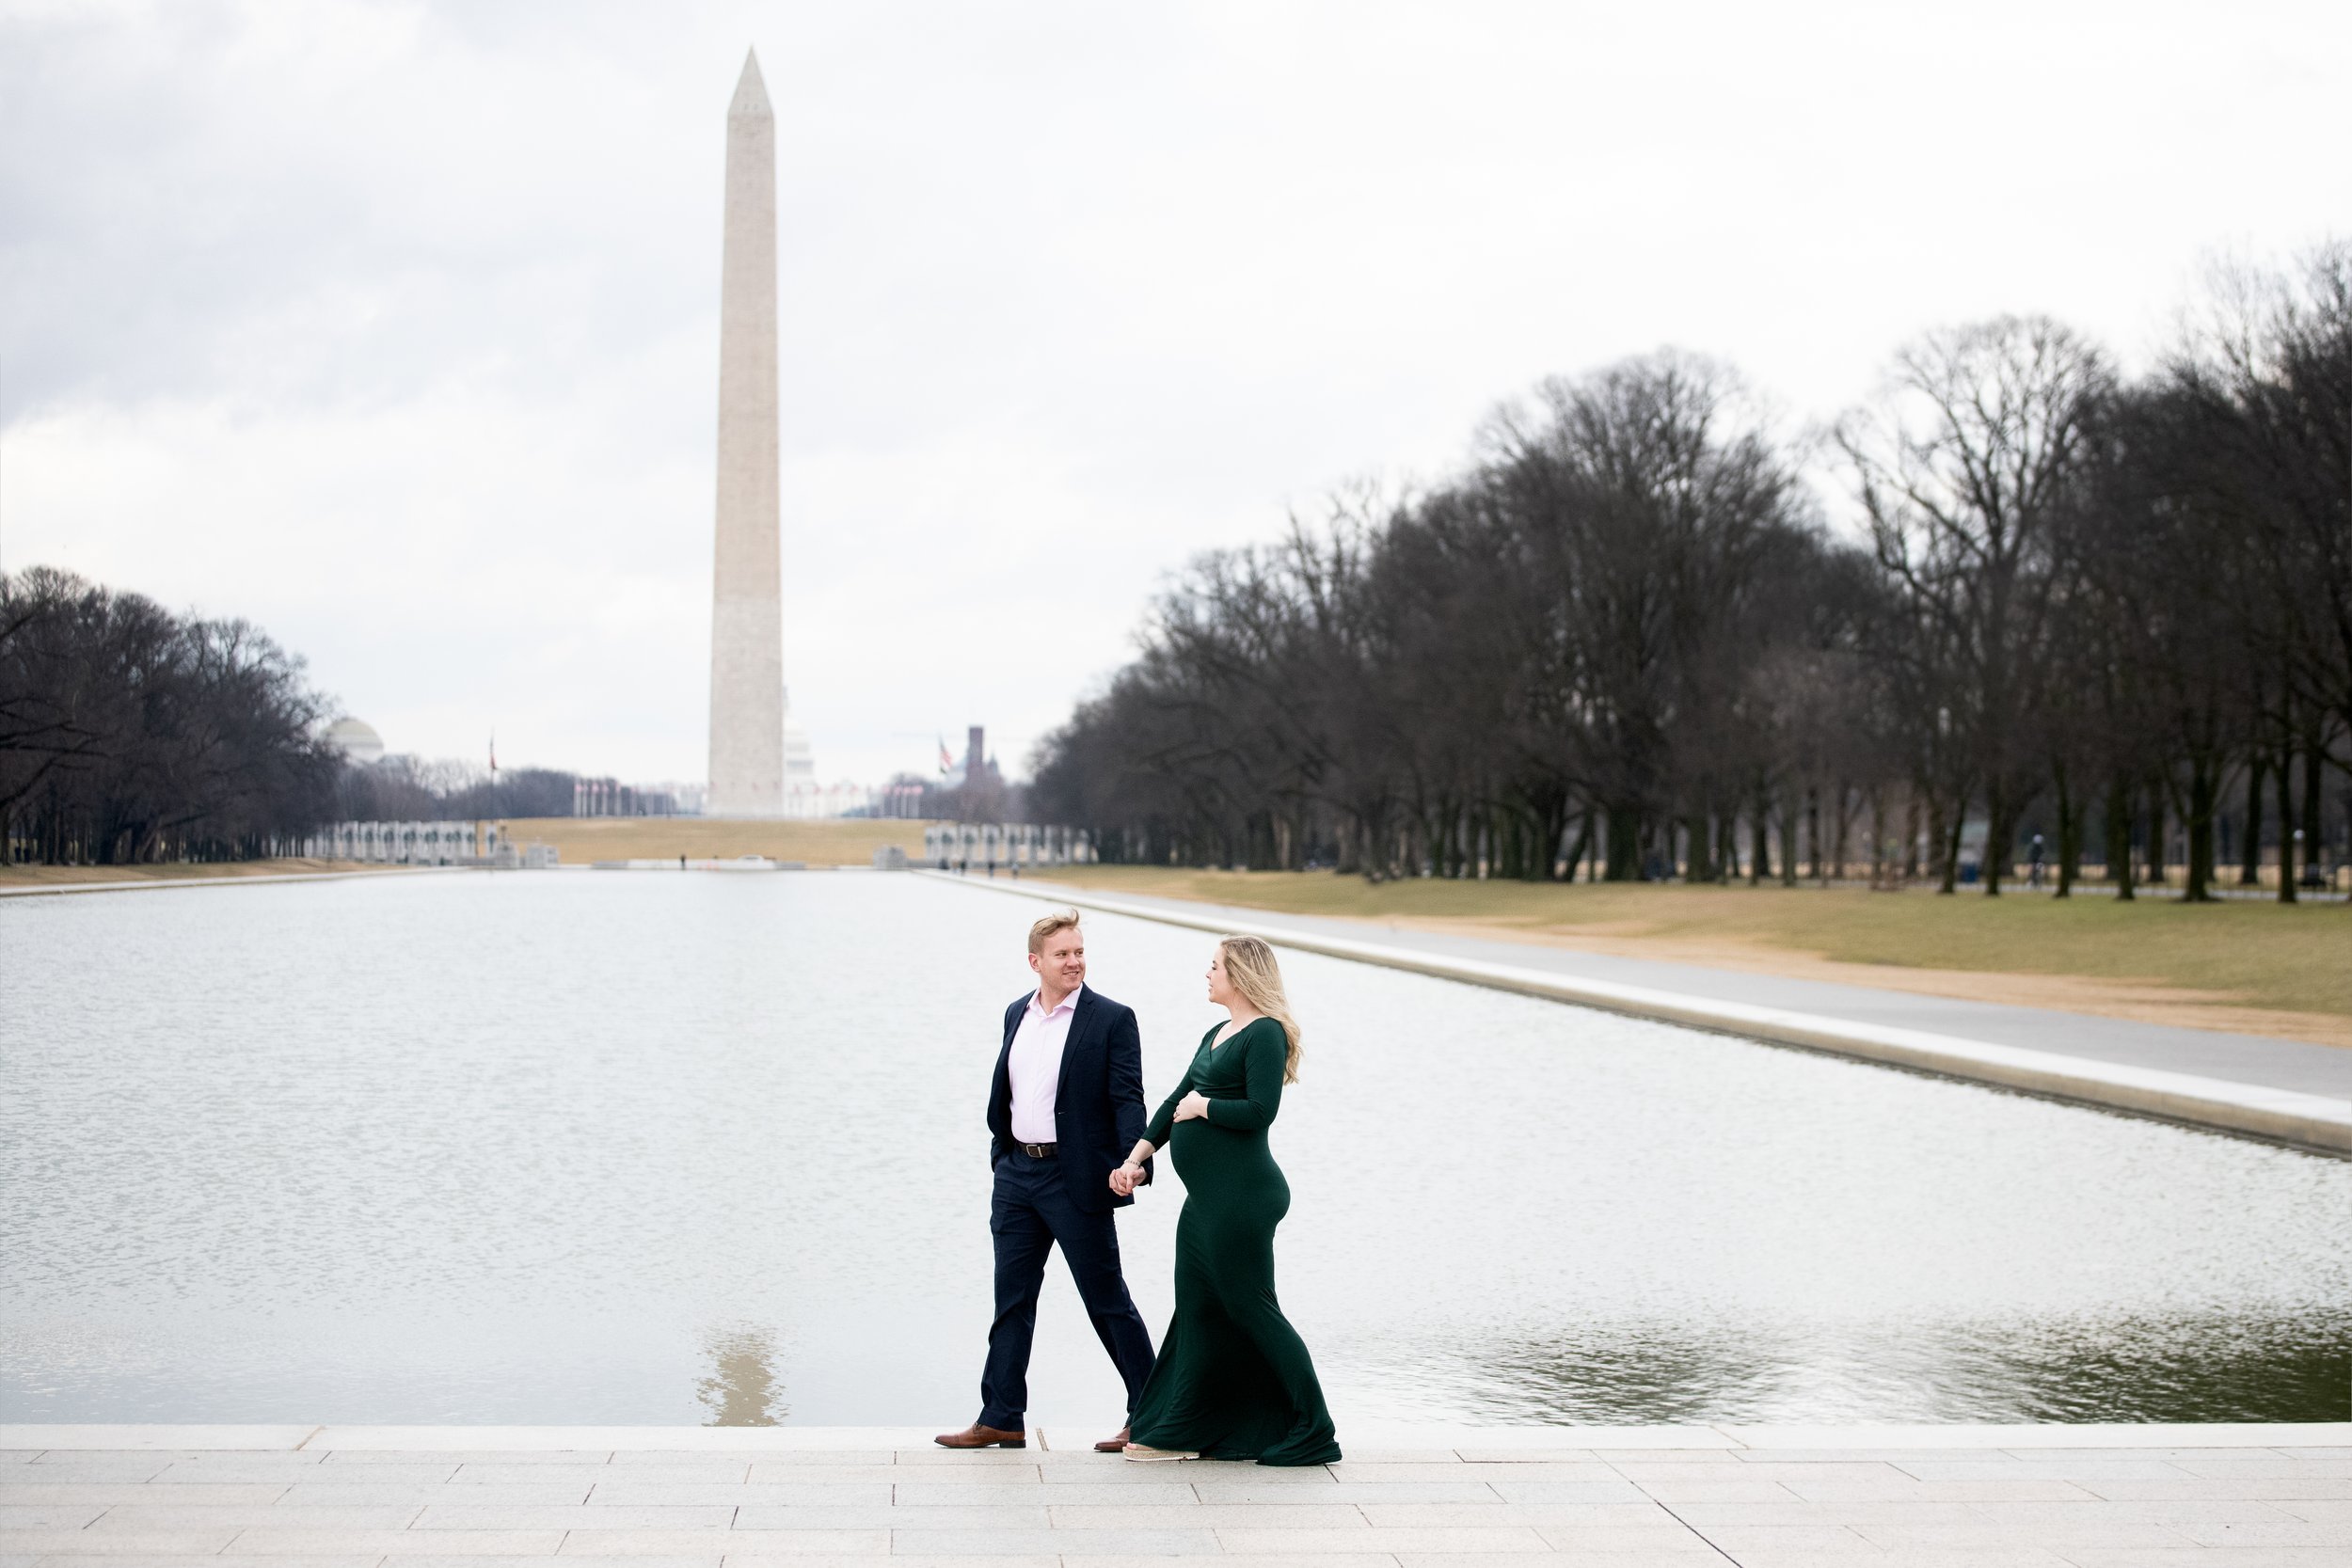  Lincoln memorial maternity photo 